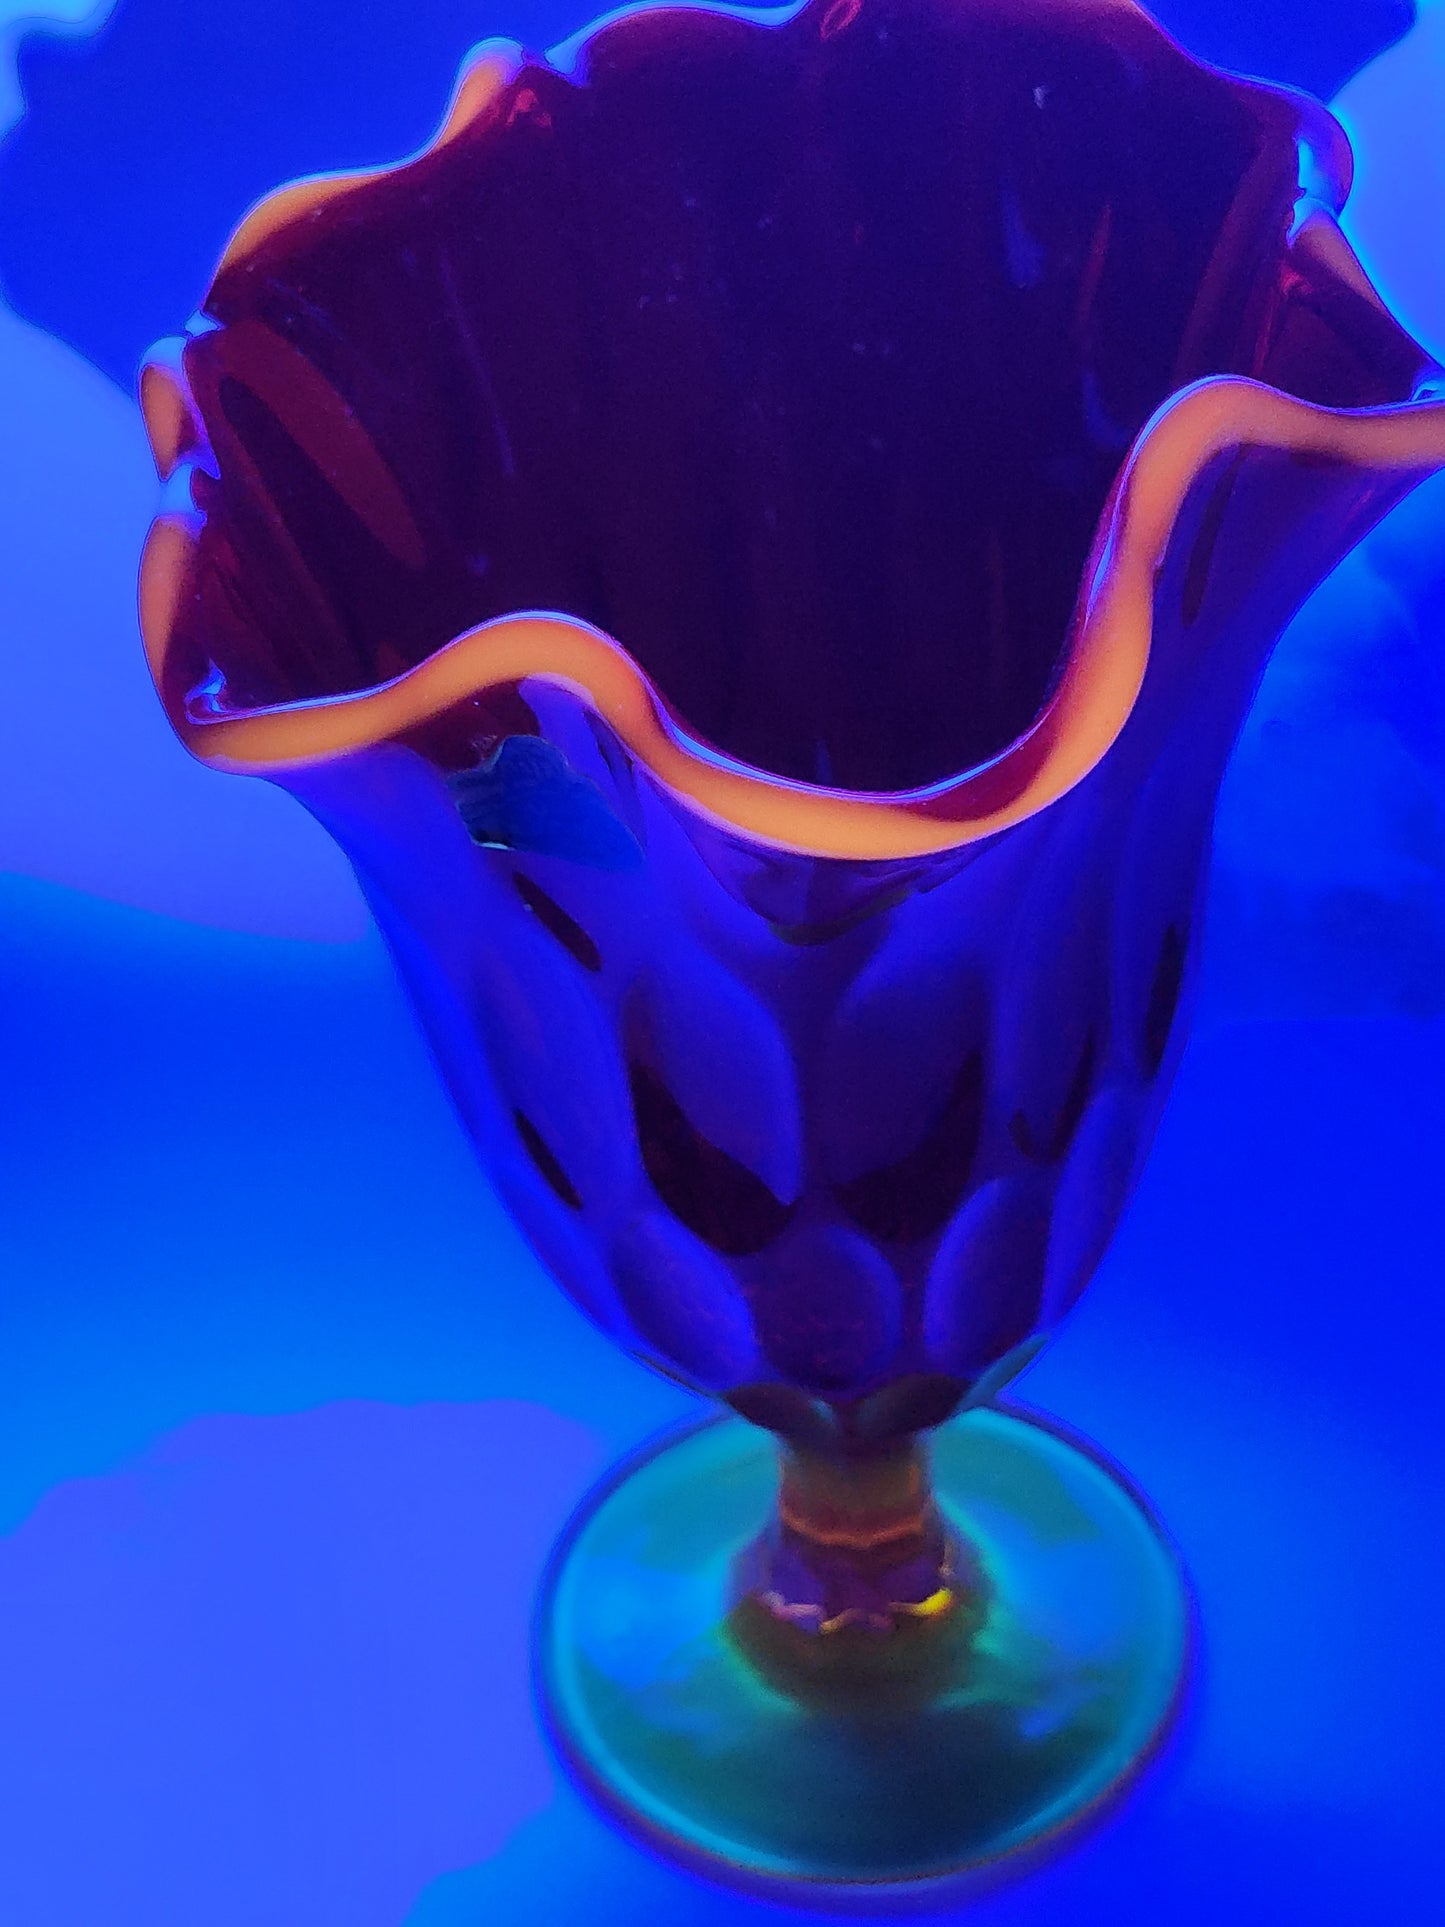 Fenton glass thumbprint amberina vase